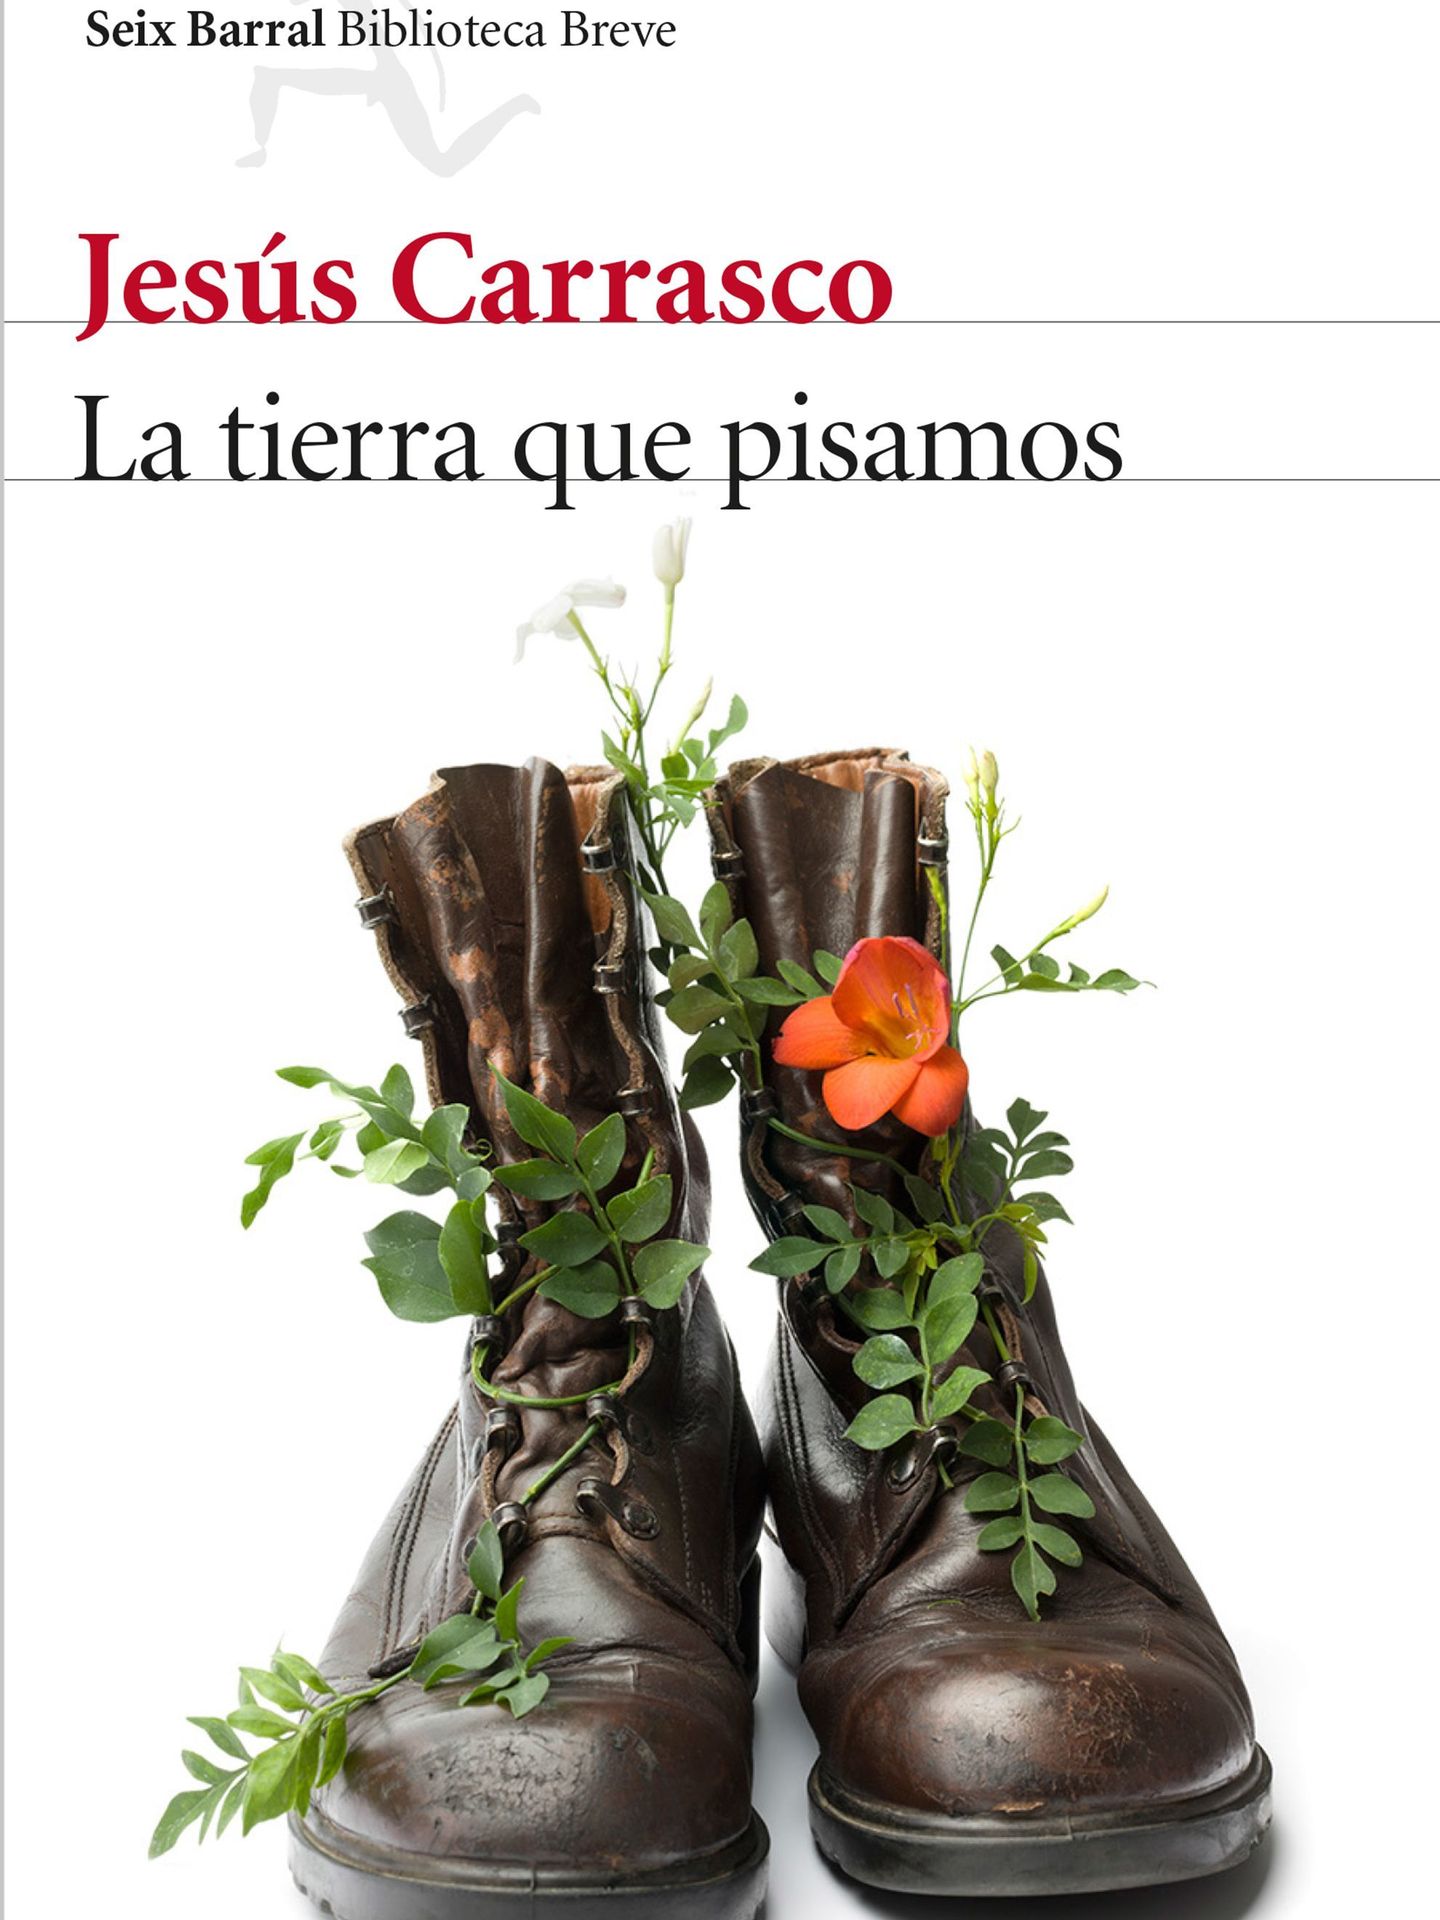 'La tierra que pisamos', de Jesús Carrasco. (Seix Barral, 2016)